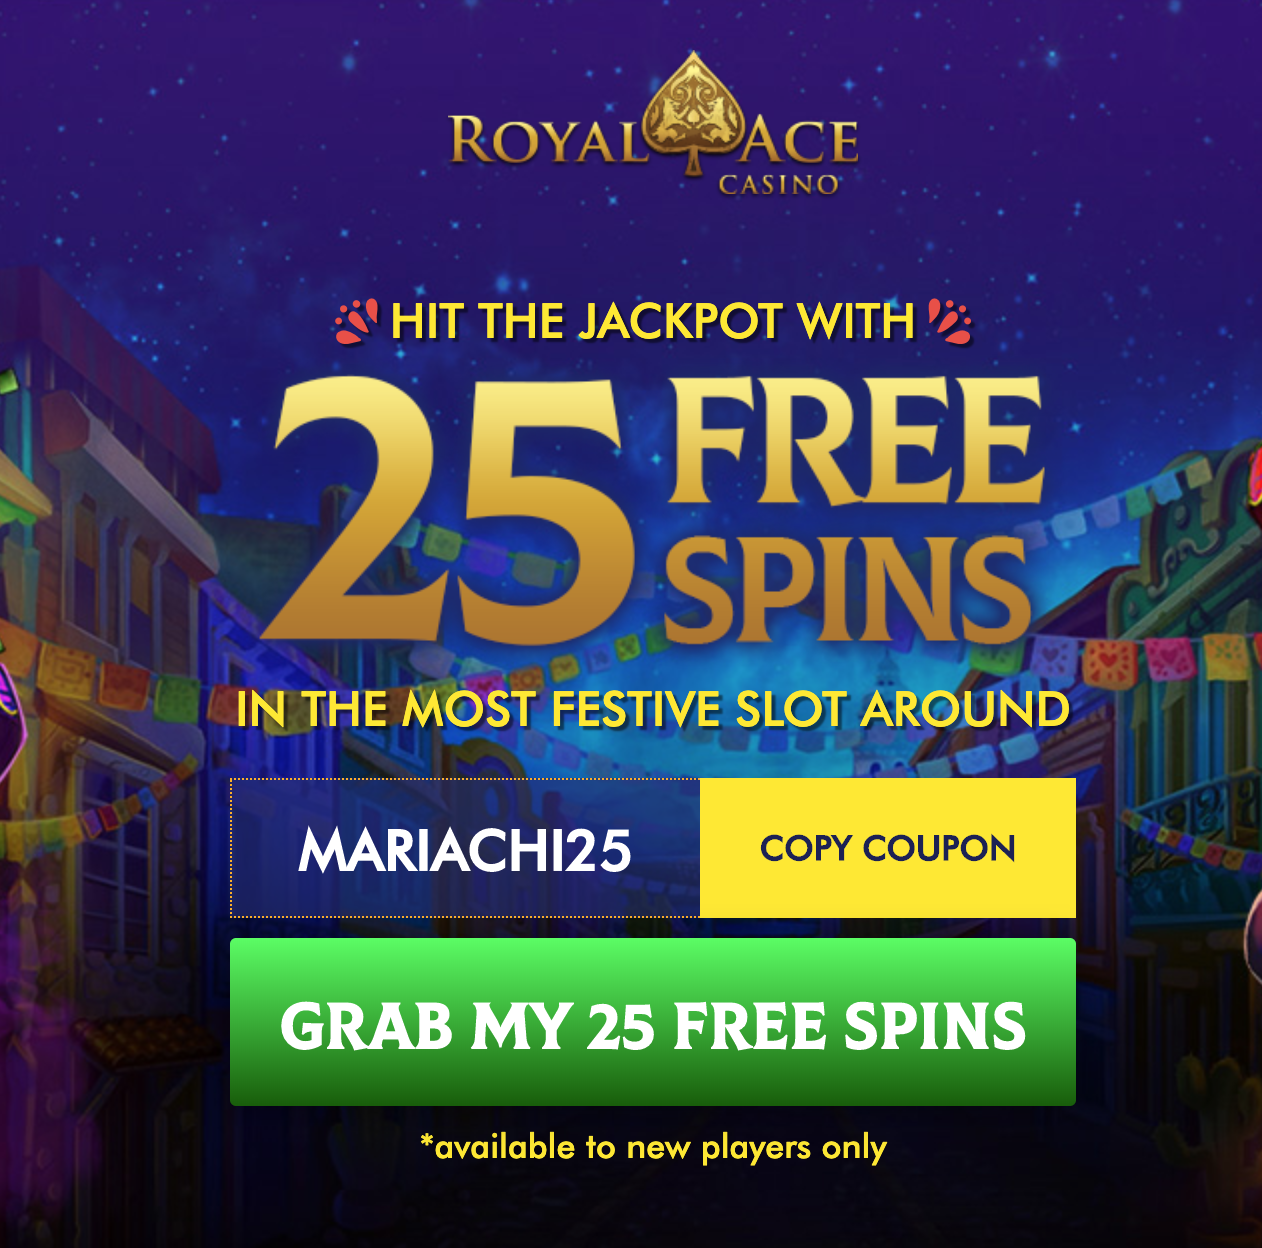 Royal ace casino bonus codes $100